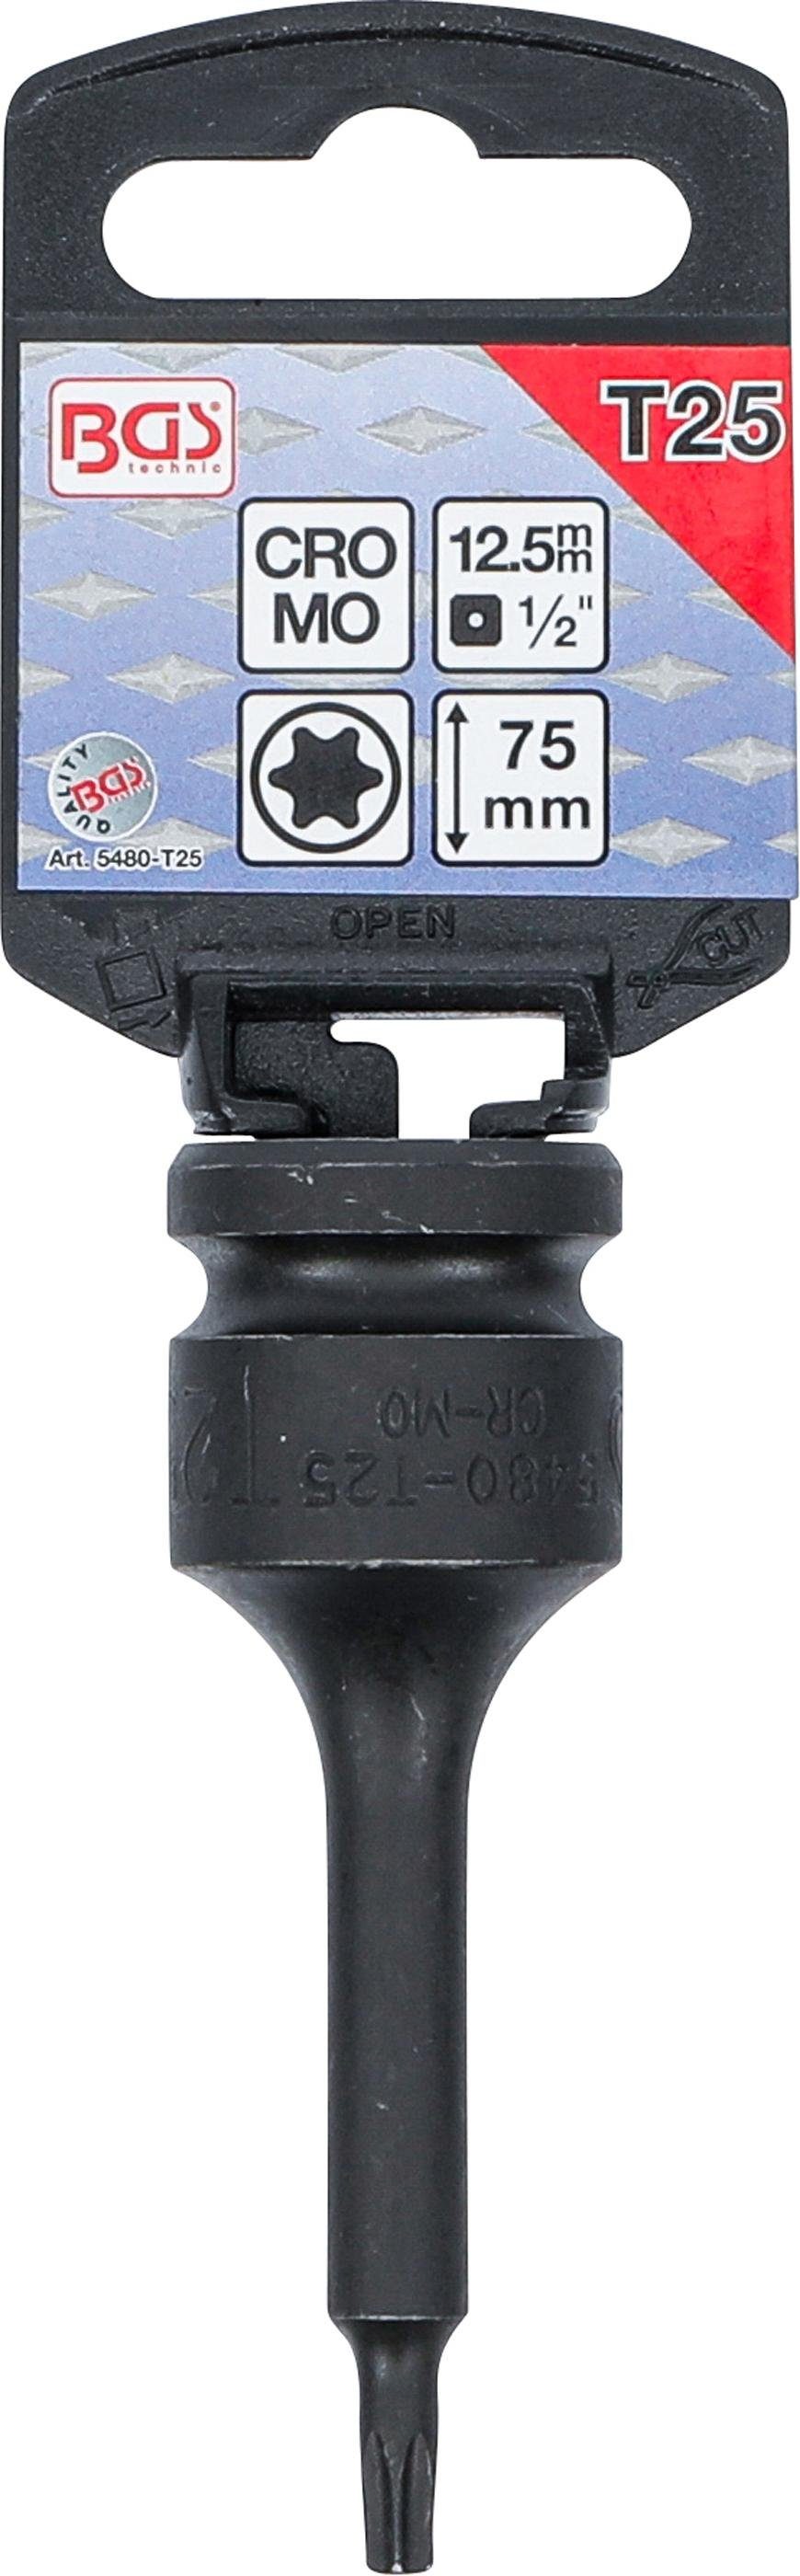 BGS technic Bit-Schraubendreher Kraft-Bit-Einsatz, Antrieb Torx) mm 12,5 (für Innenvierkant T-Profil (1/2), T25